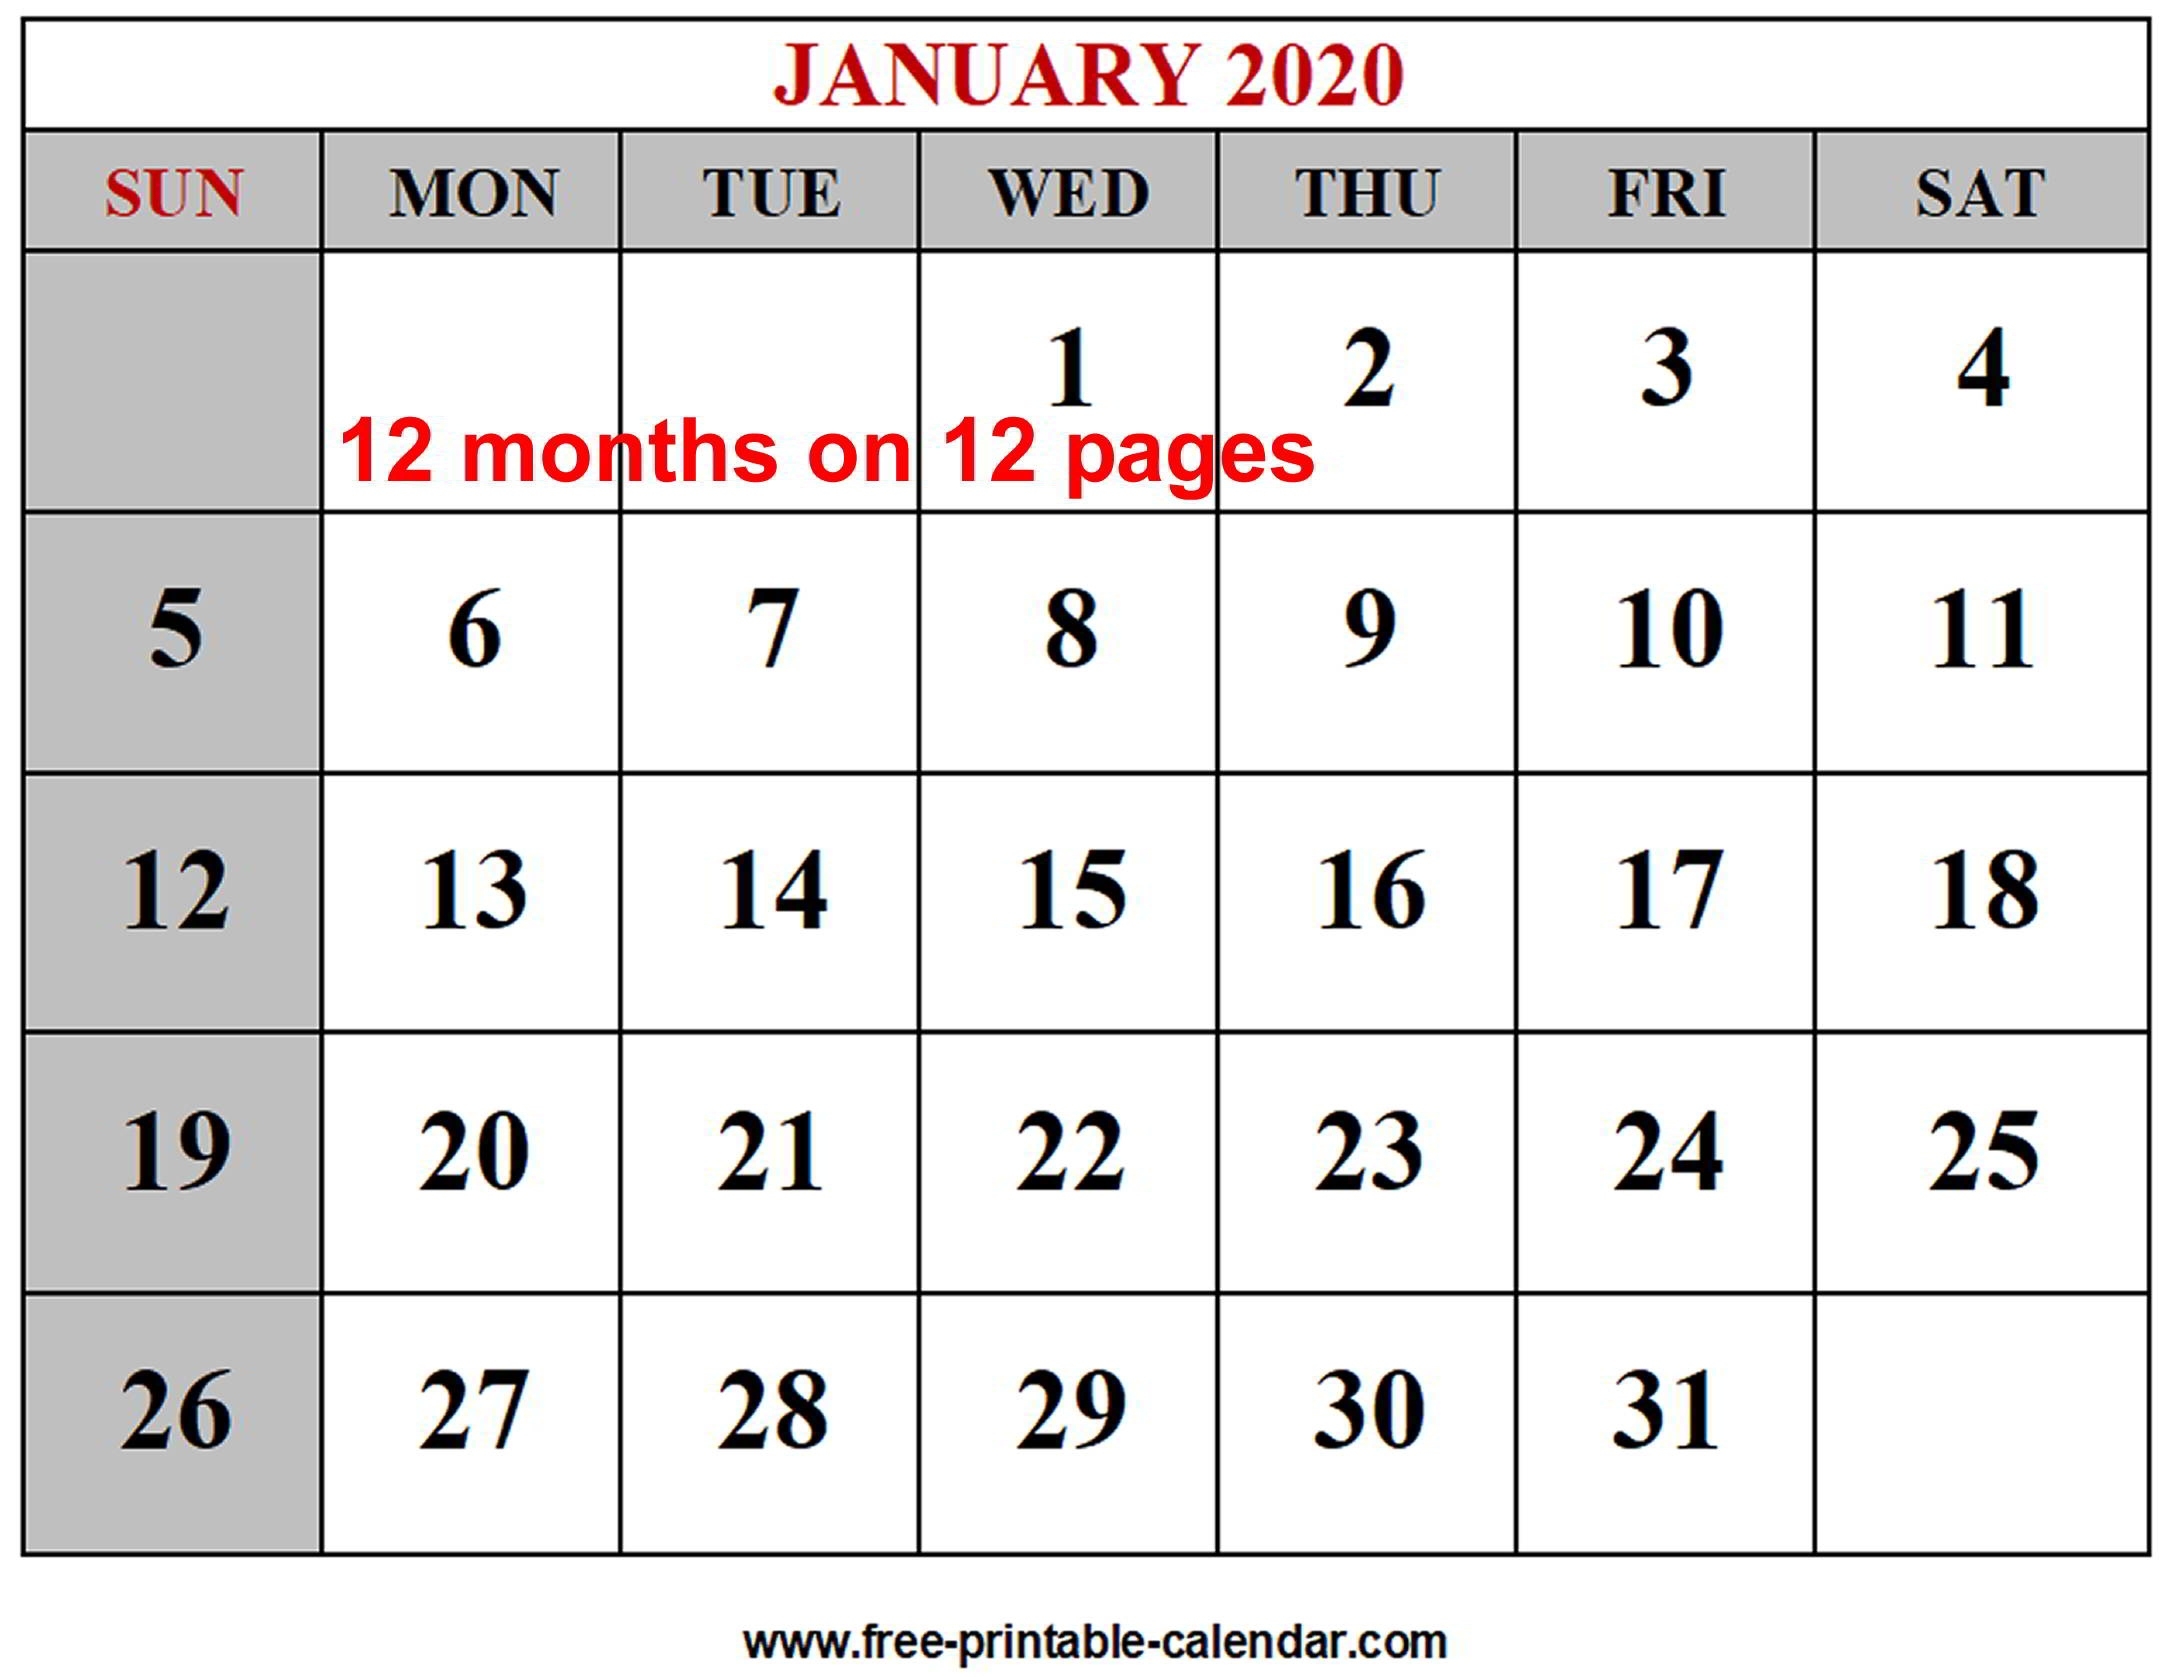 Year 2020 Calendar Templates - Free-Printable-Calendar Printable Blank Monthly Calendar Template 2020